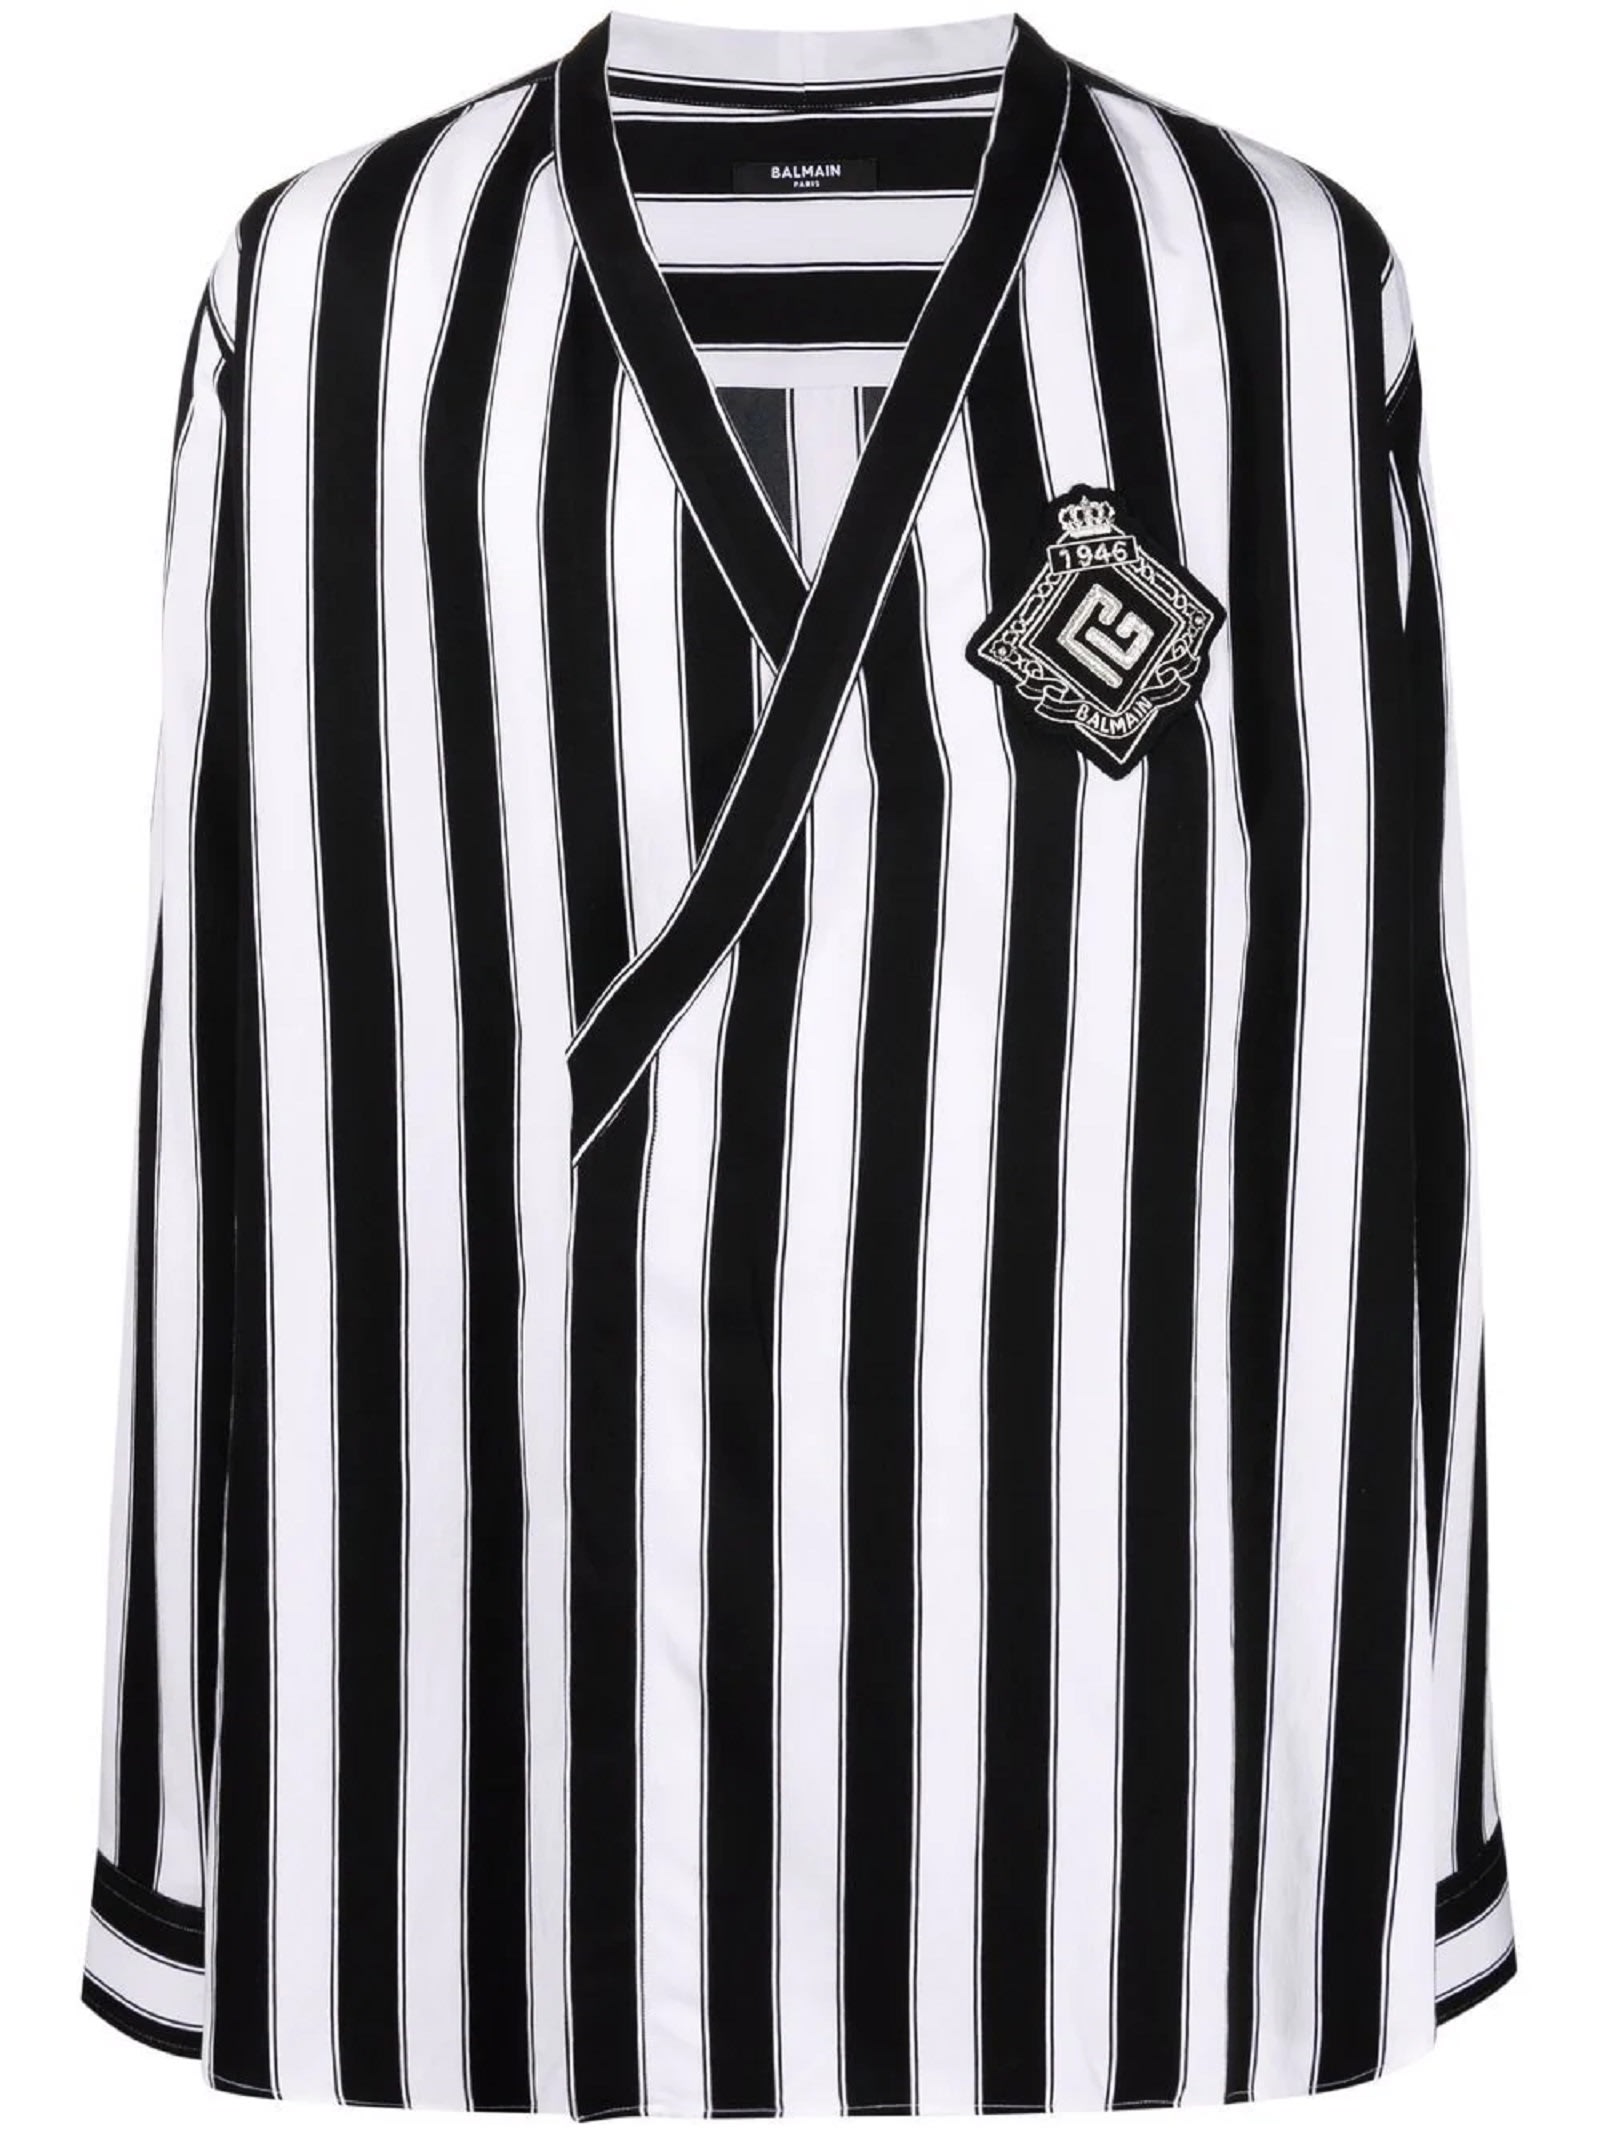 Balmain Black And White Striped Shirt